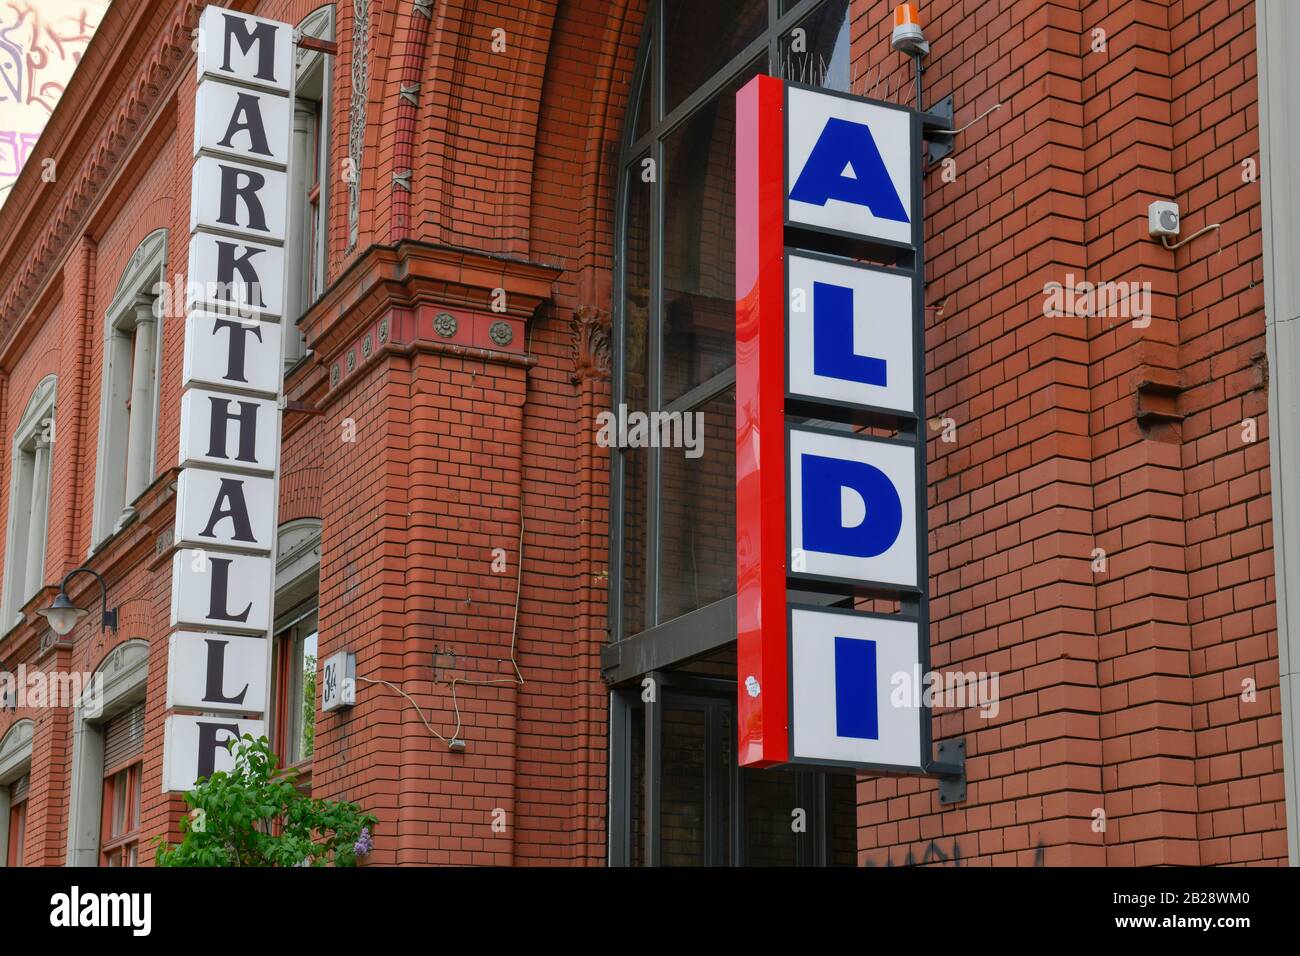 Aldi Markt, Markthalle Neun, Eisenbahnstraße, Kreuzberg, Berlin, Deutschland Stock Photo